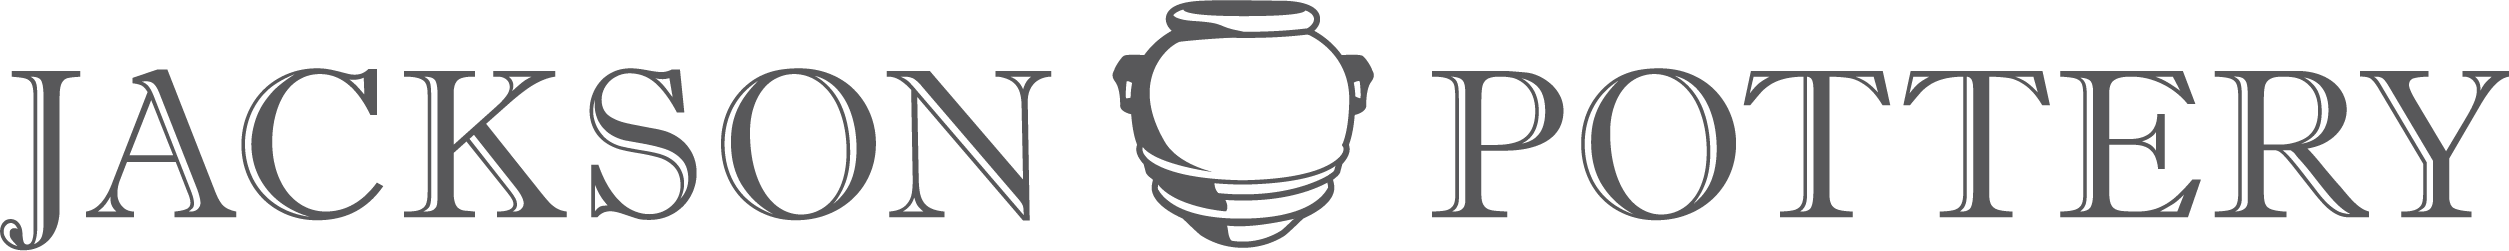 jackson pottery logo